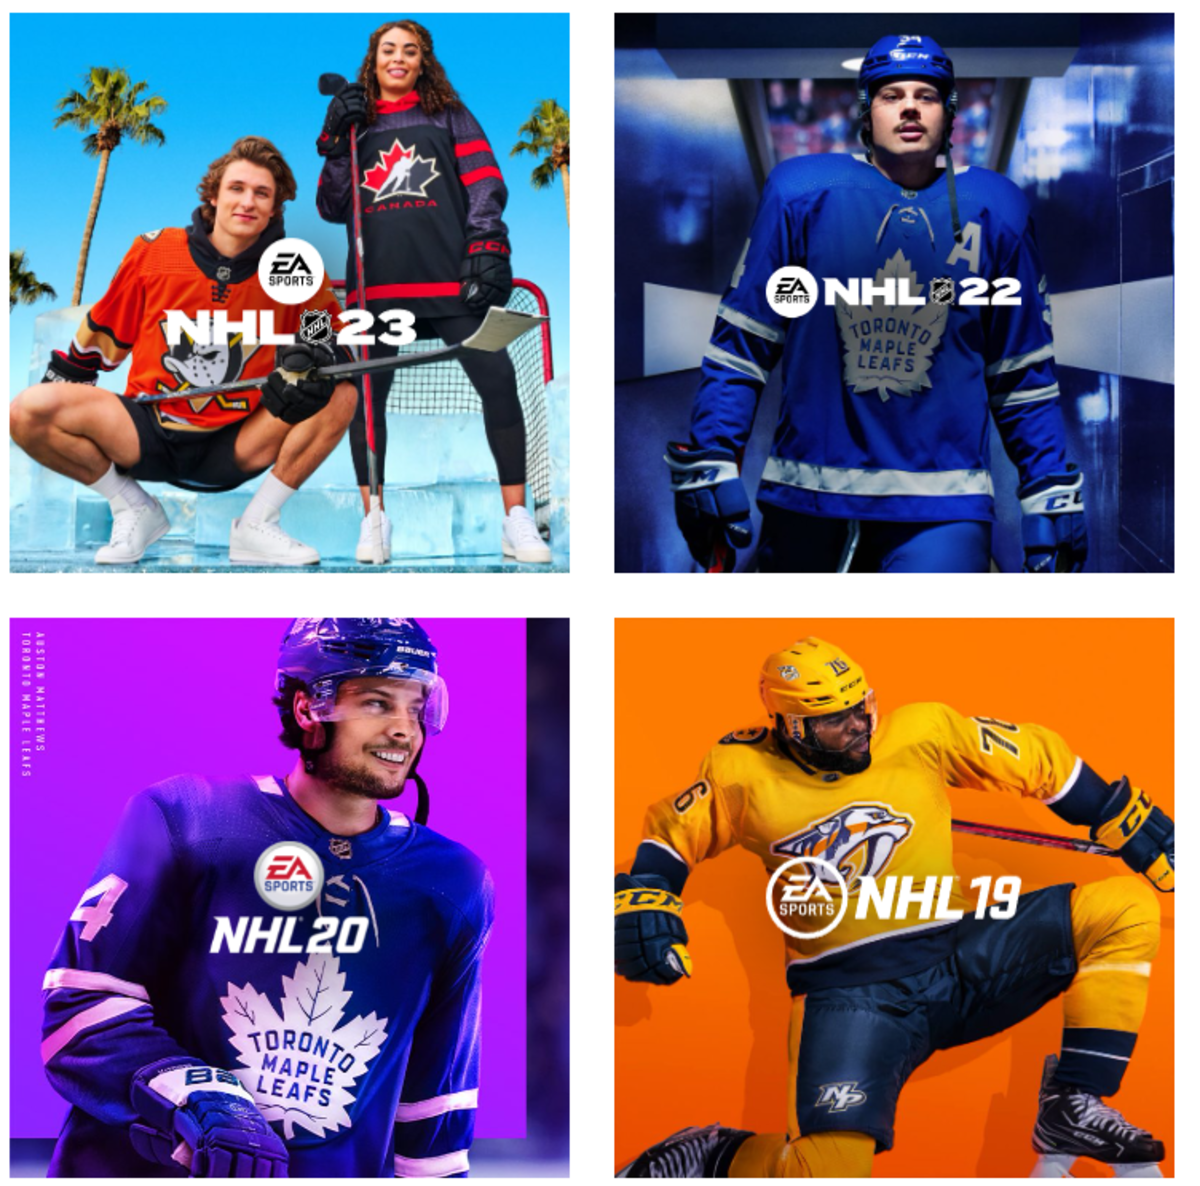 Ranking the last 5 NHL games